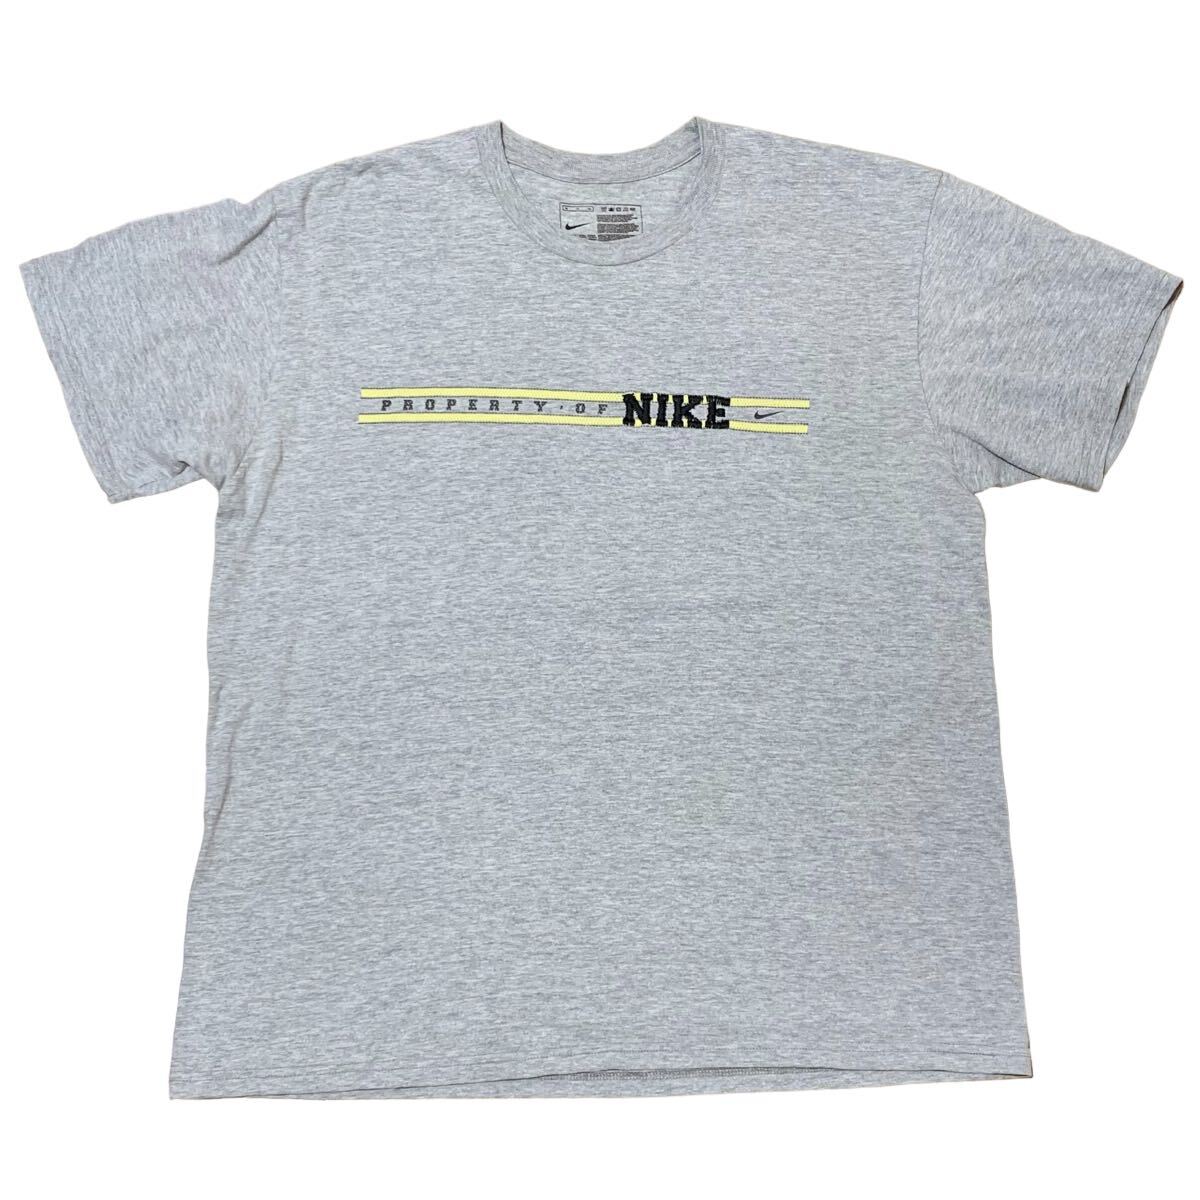 2000s NIKE Tシャツ 半袖 ロゴ 刺繍 グレー スウッシュ 2000年代 00s vintage ビンテージ ヴィンテージ ゴツナイキ 風車 ビッグスウッシュ_画像1